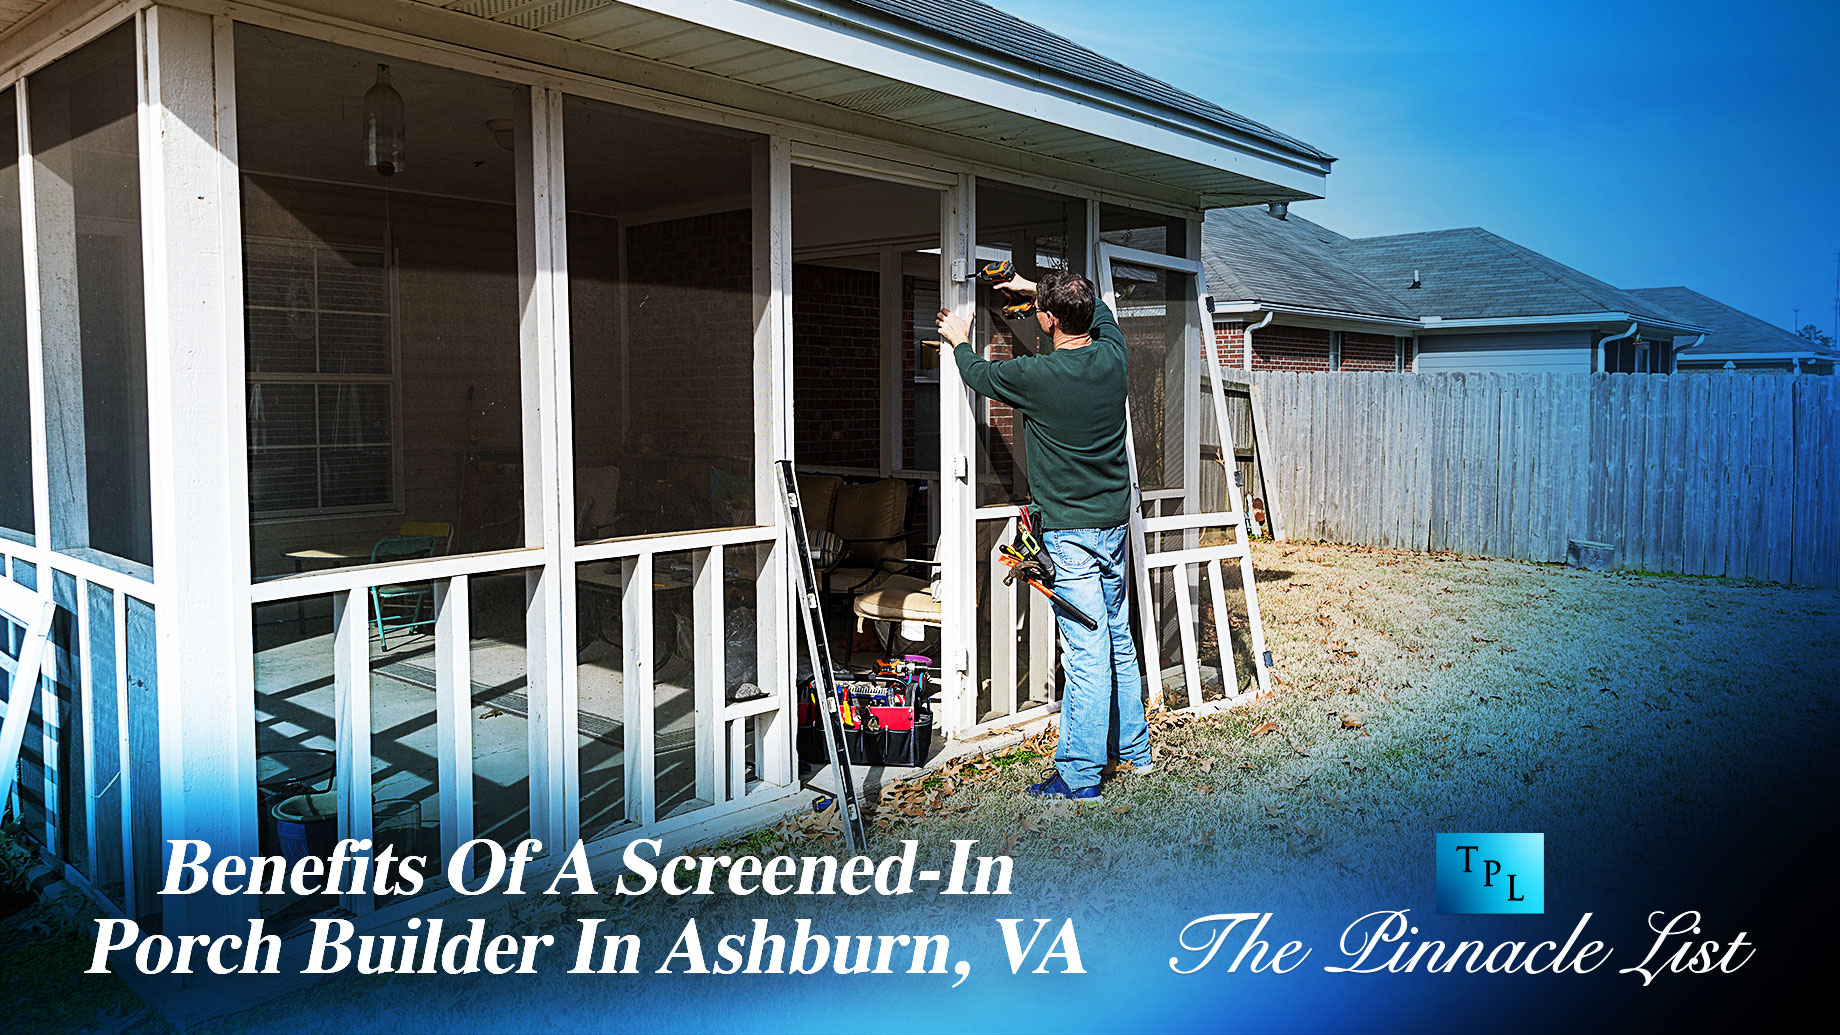 Benefits Of A Screened-In Porch Builder In Ashburn, VA